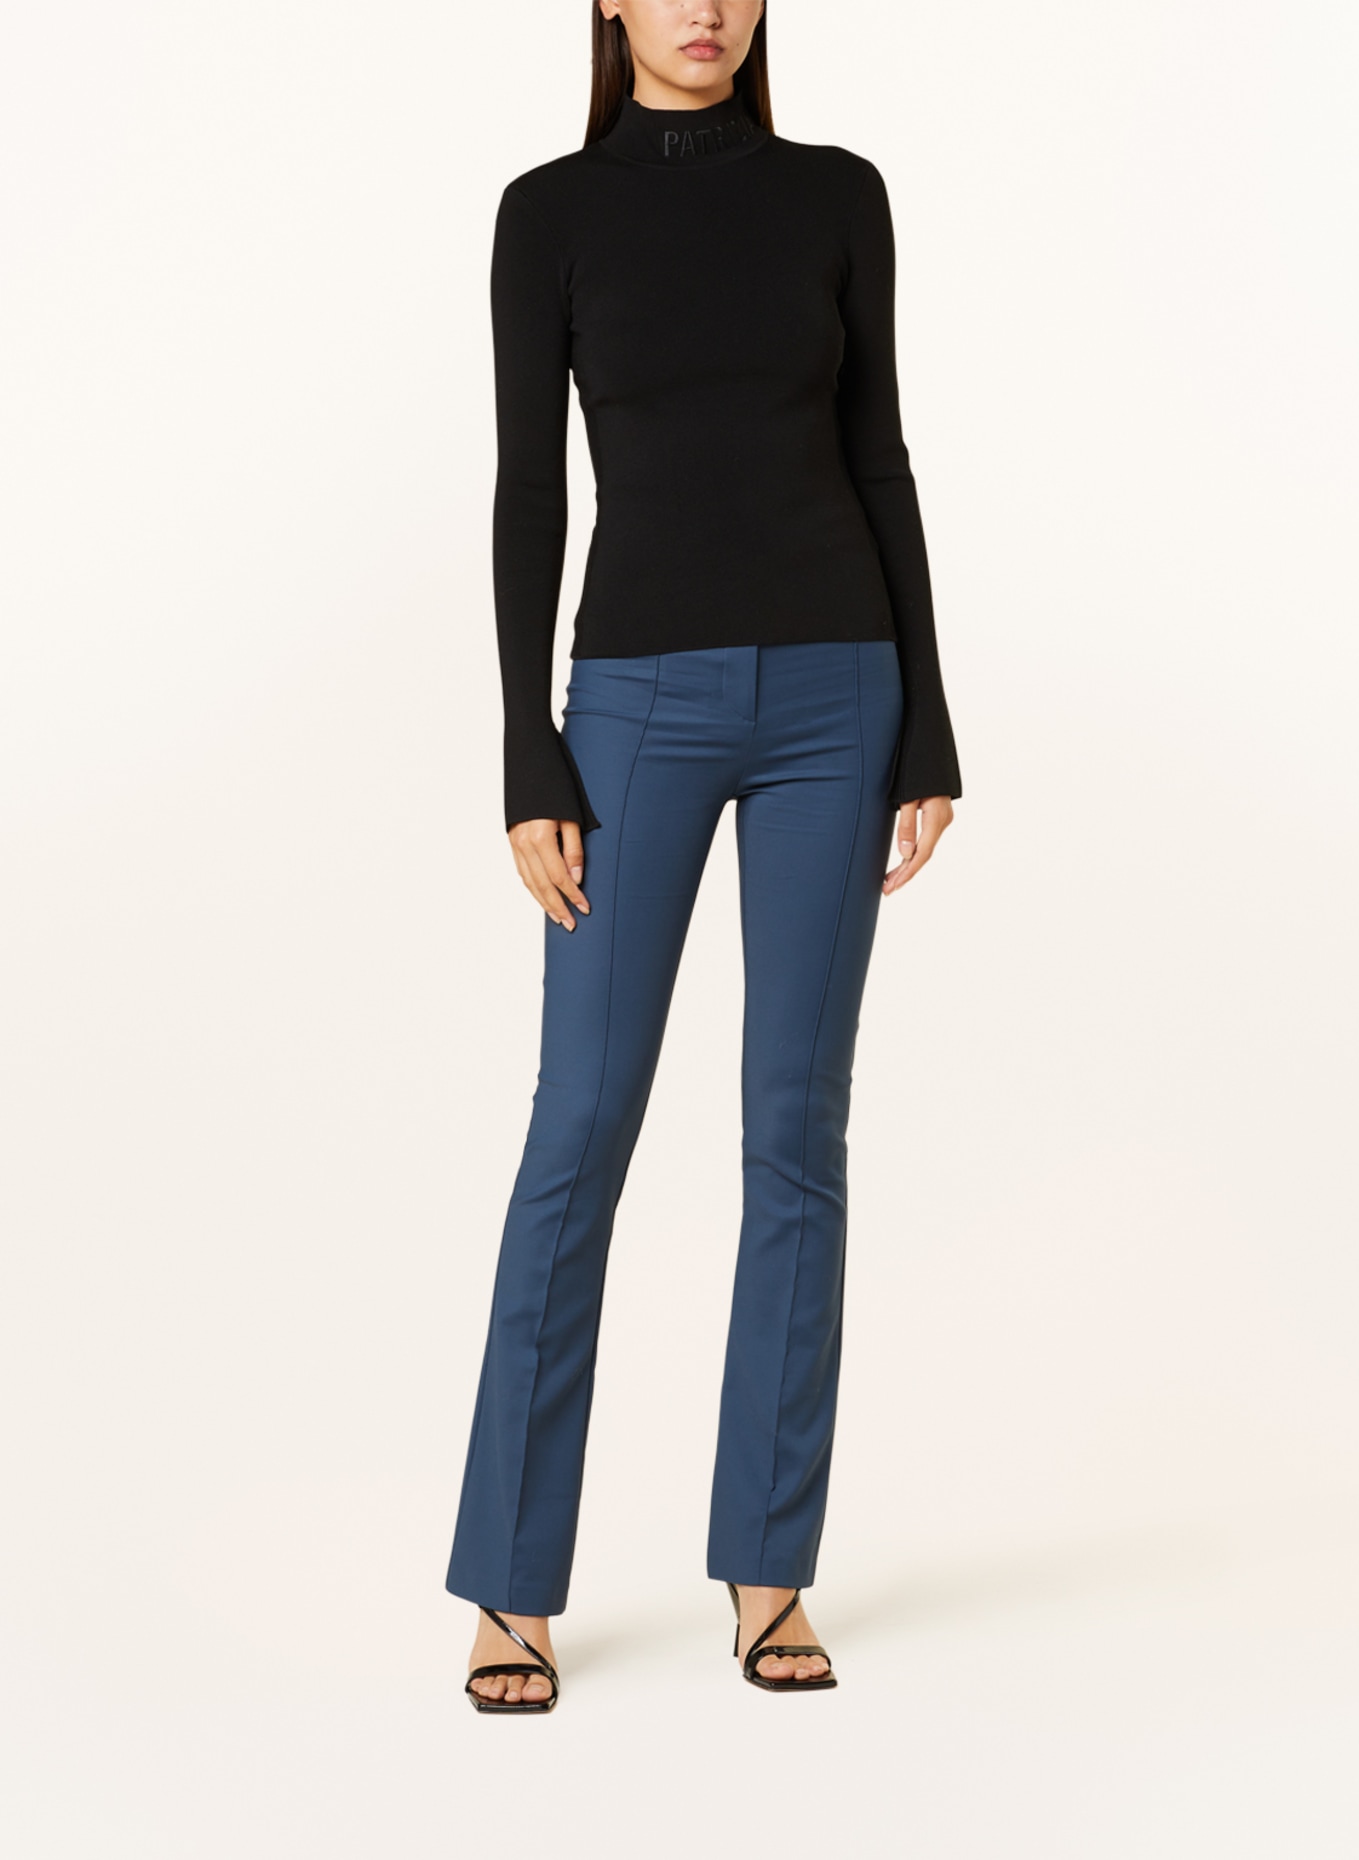 PATRIZIA PEPE Sweater, Color: BLACK (Image 2)